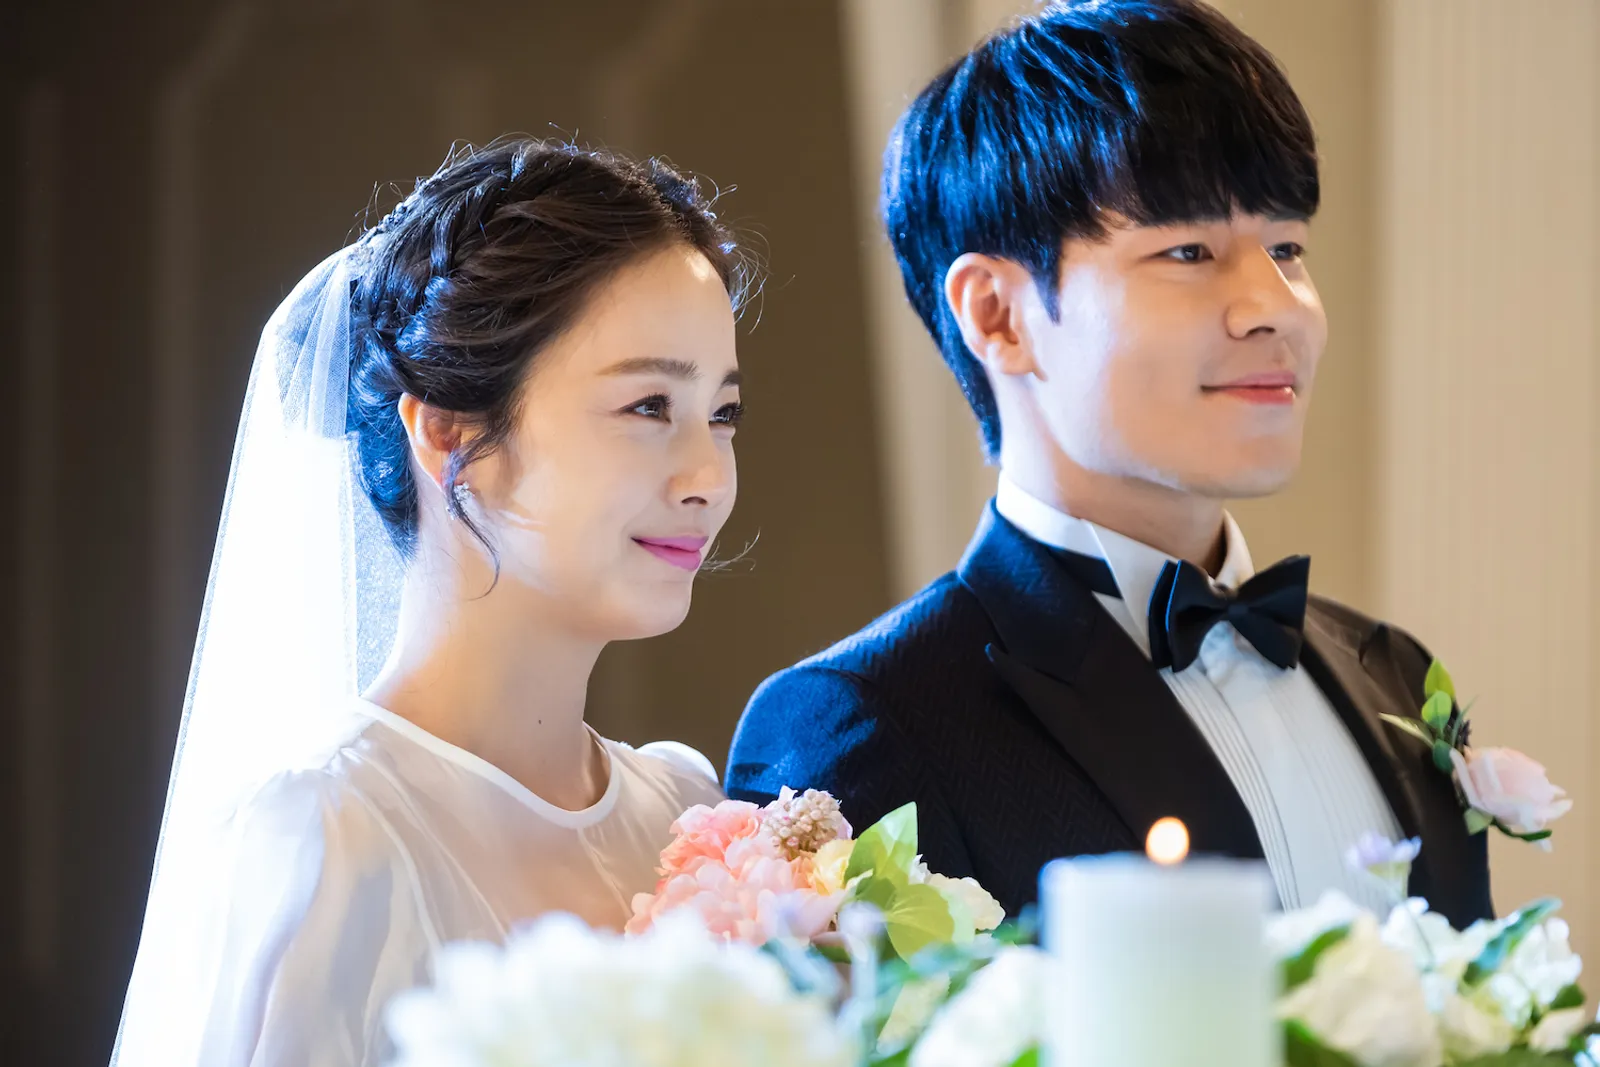 Rekomendasi 6 Serial Drama Korea yang Rilis Maret 2020 di Netflix